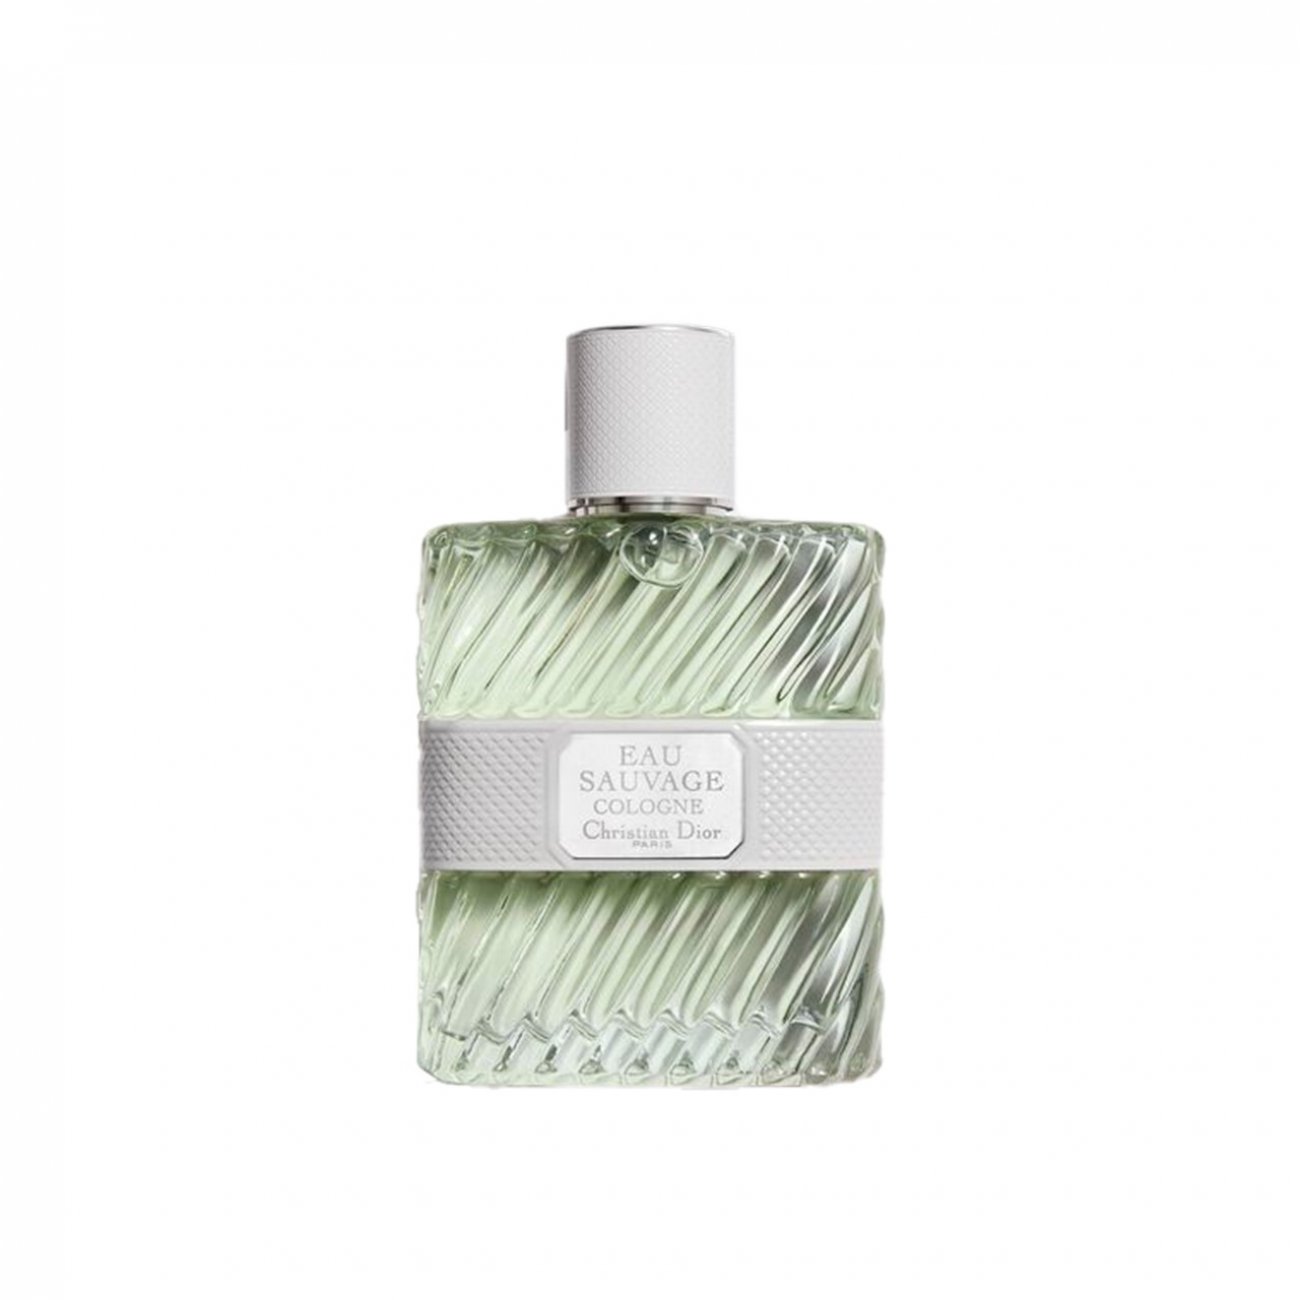 Chanel Coco Eau de Parfum Spray 100 ML for WOMEN  Buy Chanel Coco Eau de  Parfum Spray Online at lowest price in India 